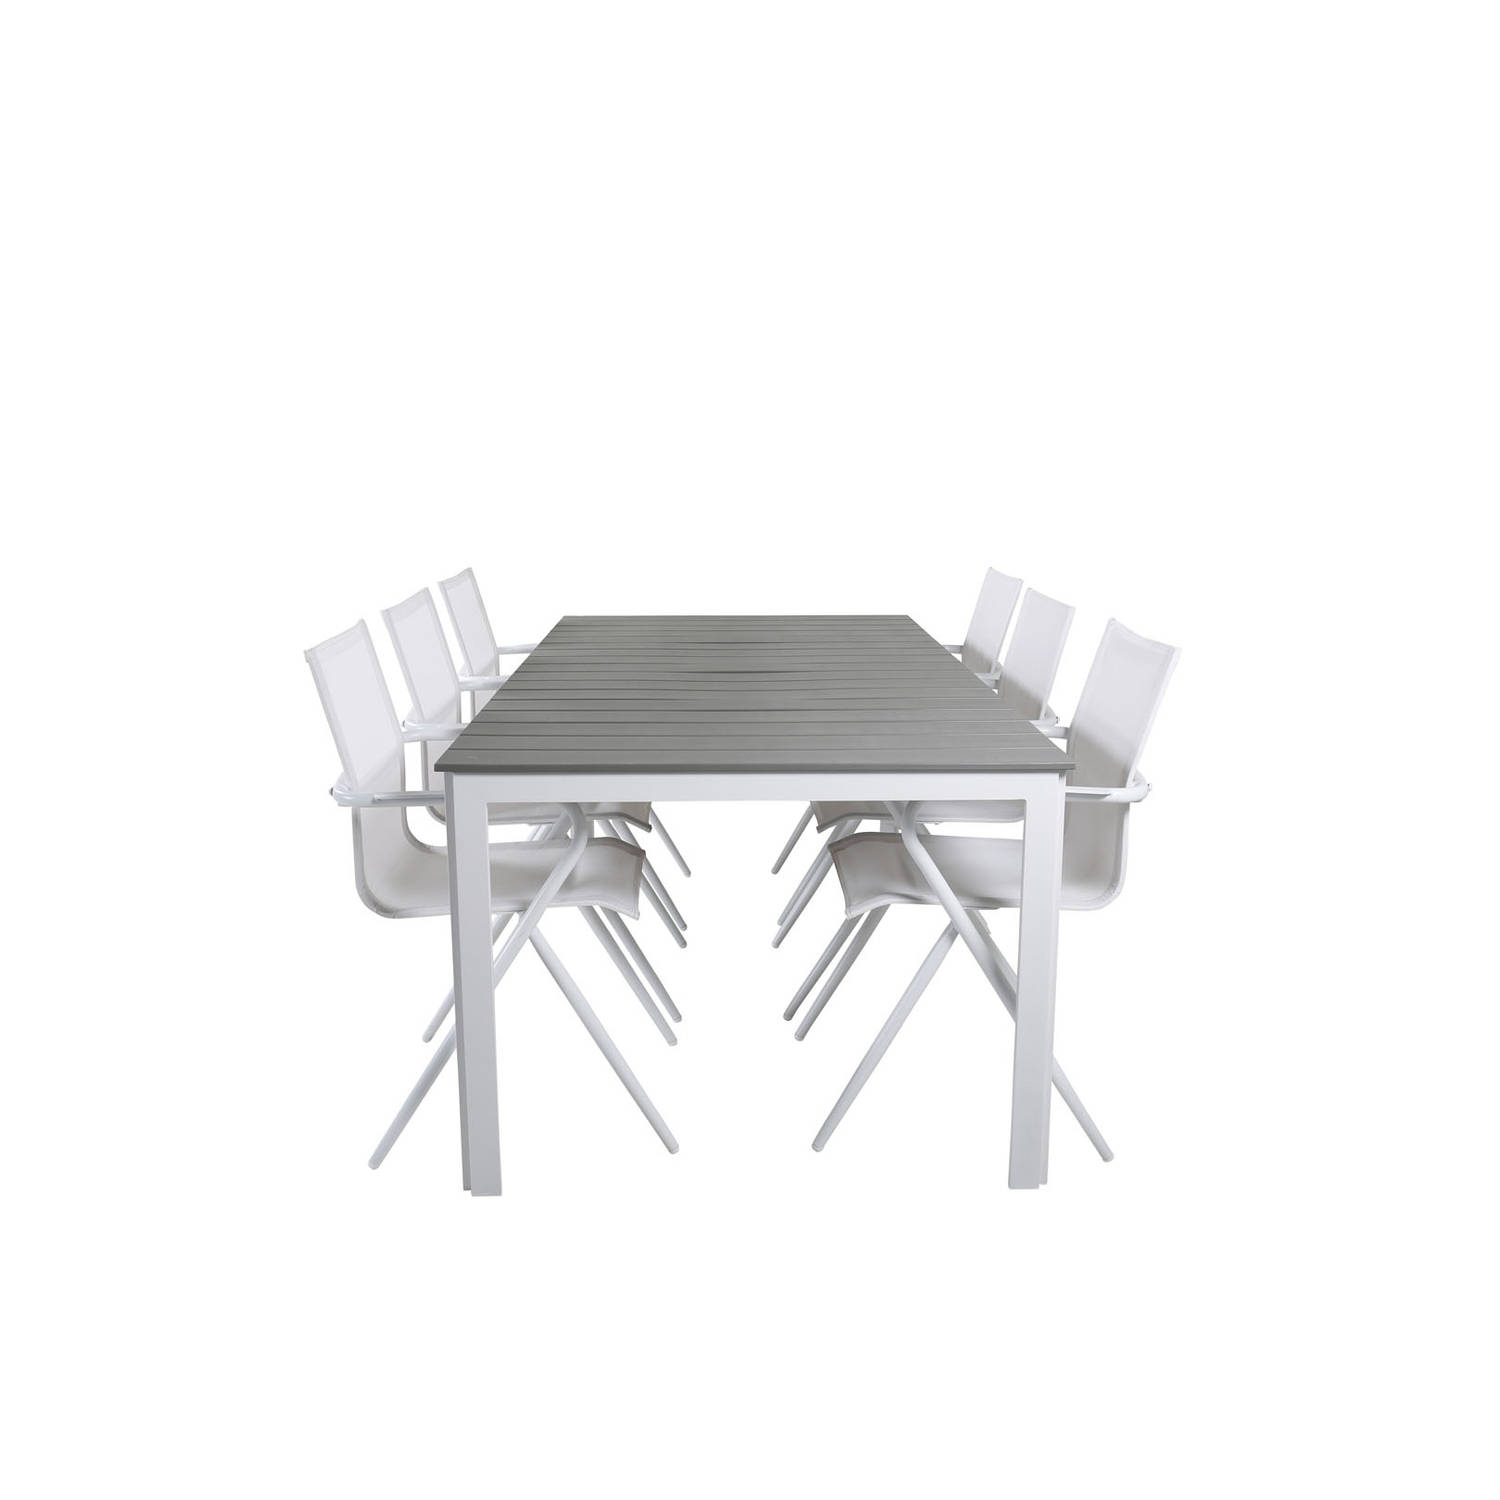 Parma tuinmeubelset tafel 100x200cm en 6 stoel Alina wit, grijs.